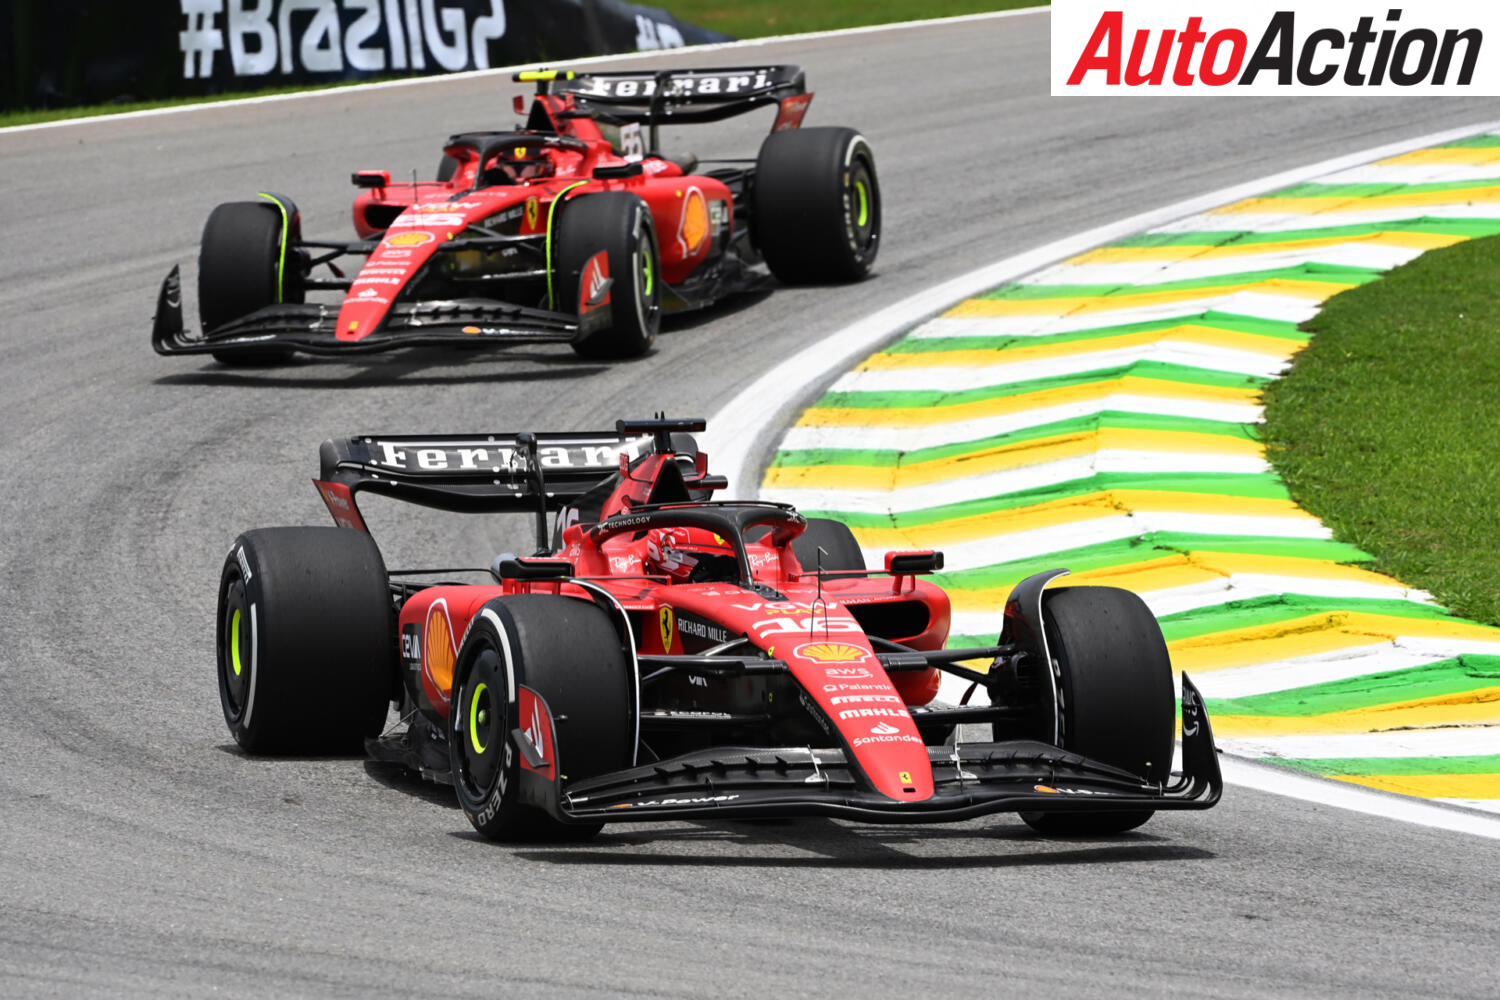 São Paulo for the final Sprint of the season